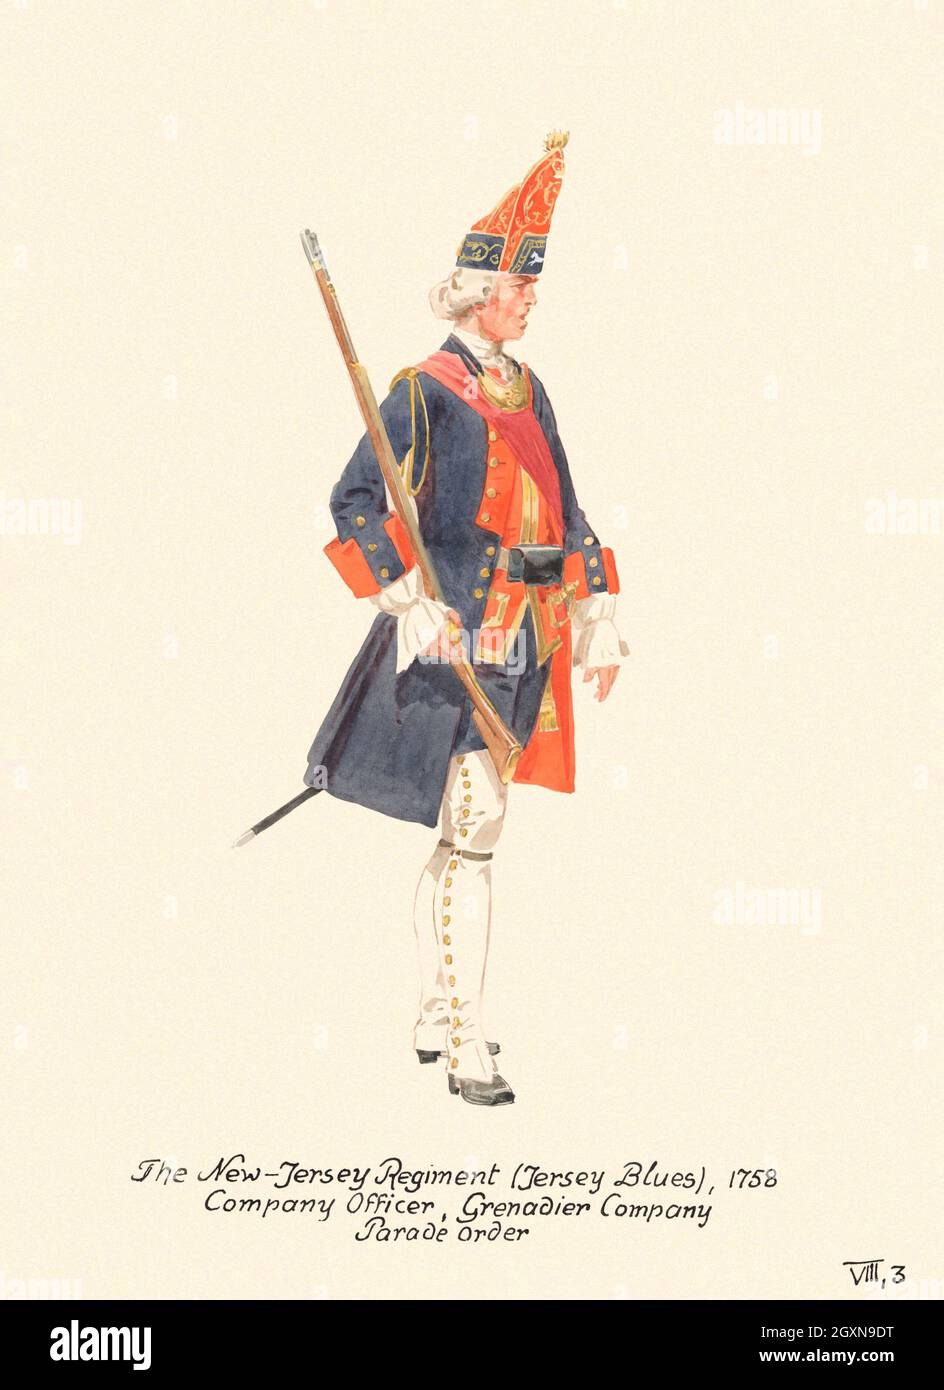 Offizier der New-Jersey Regiment Company Stockfoto